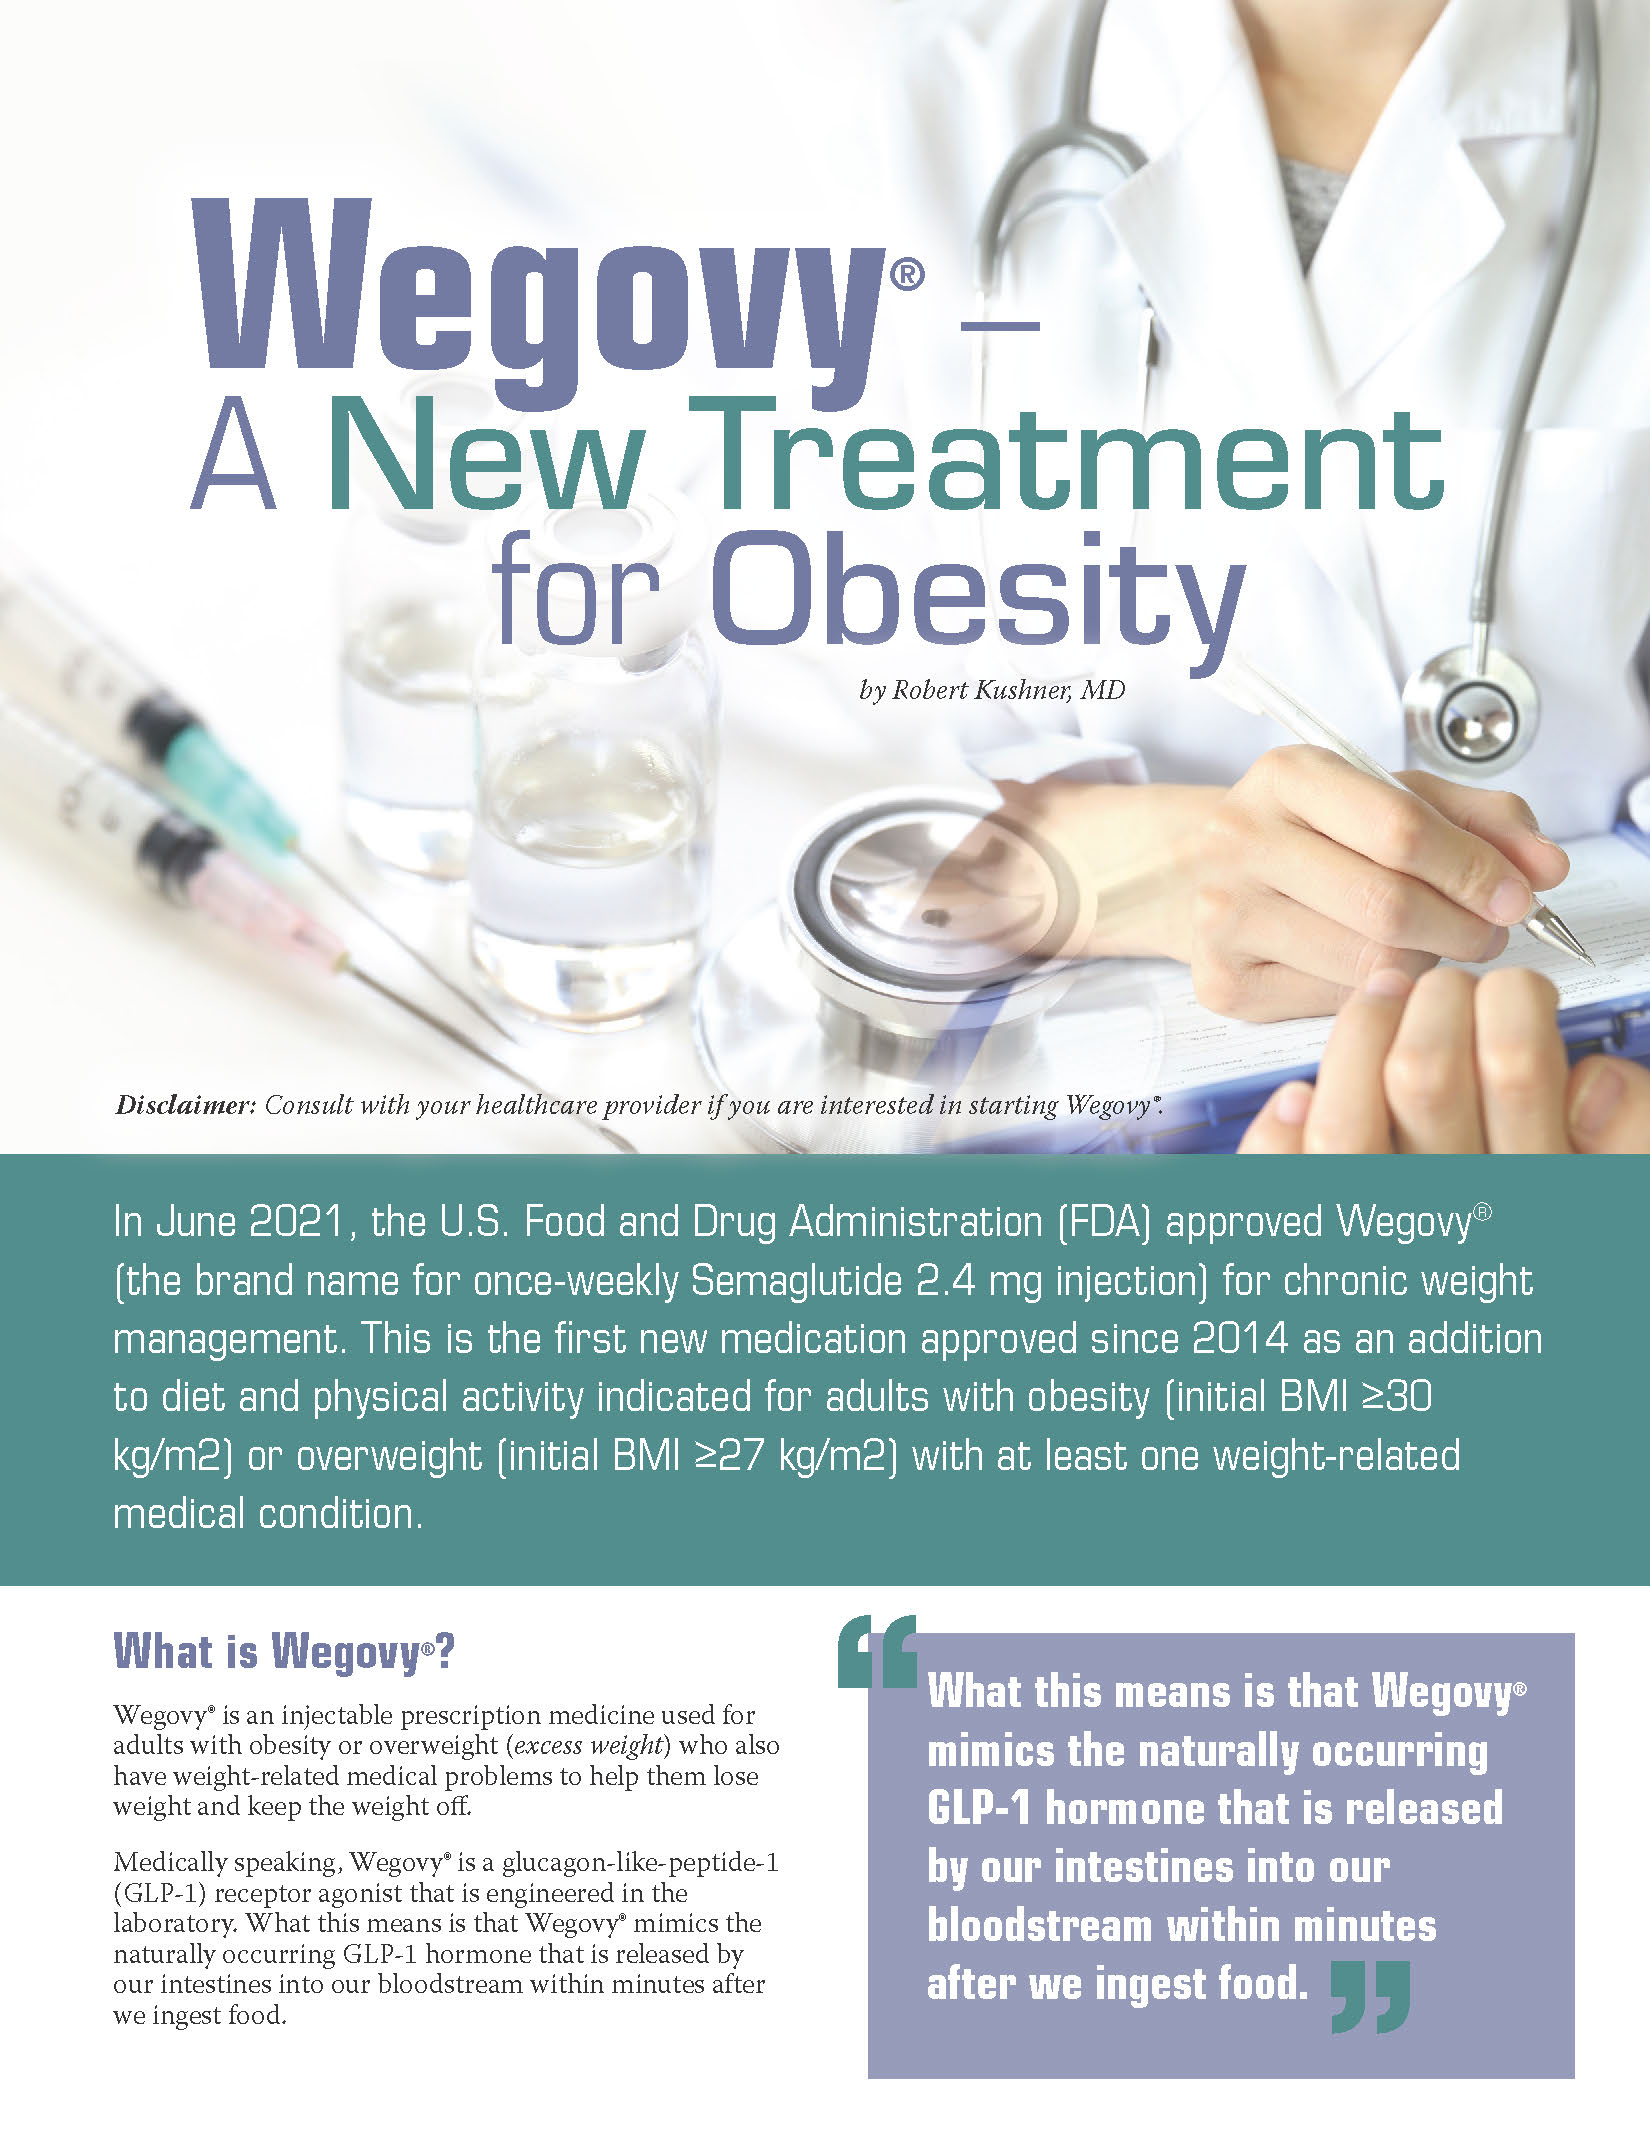 wegovy-a-new-treatment-for-obesity-obesity-action-coalition